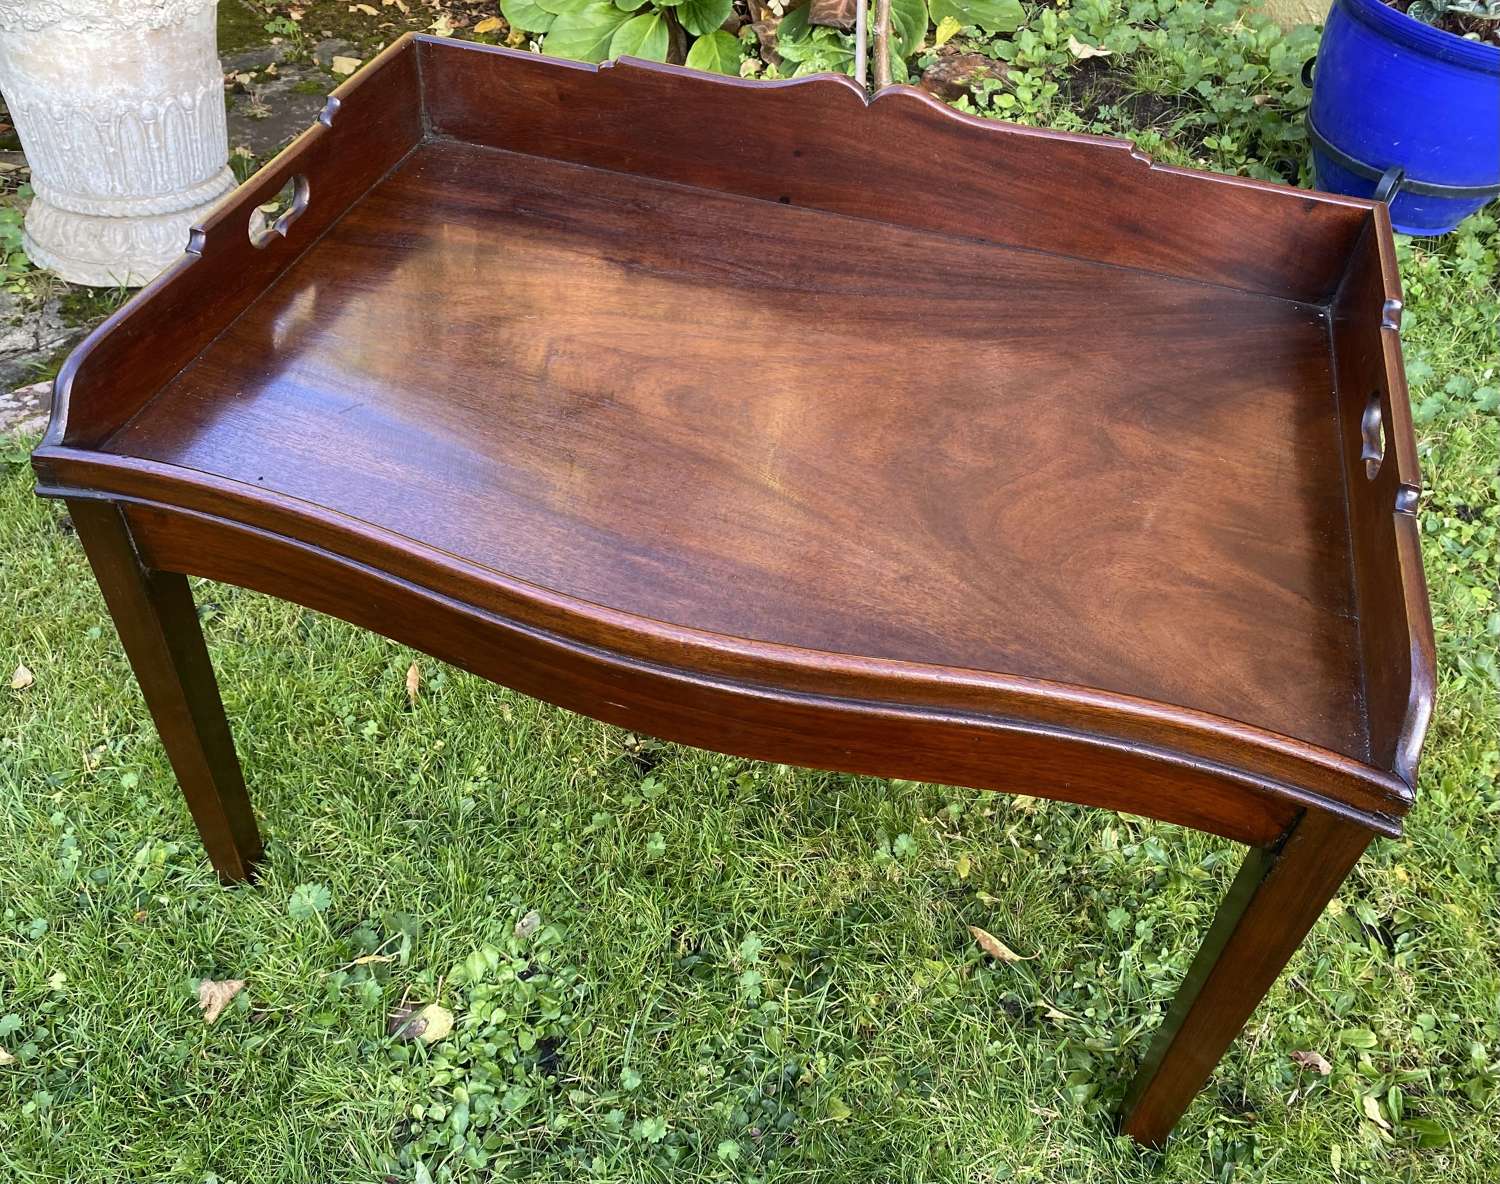 Late Georgian tray table or coffee table